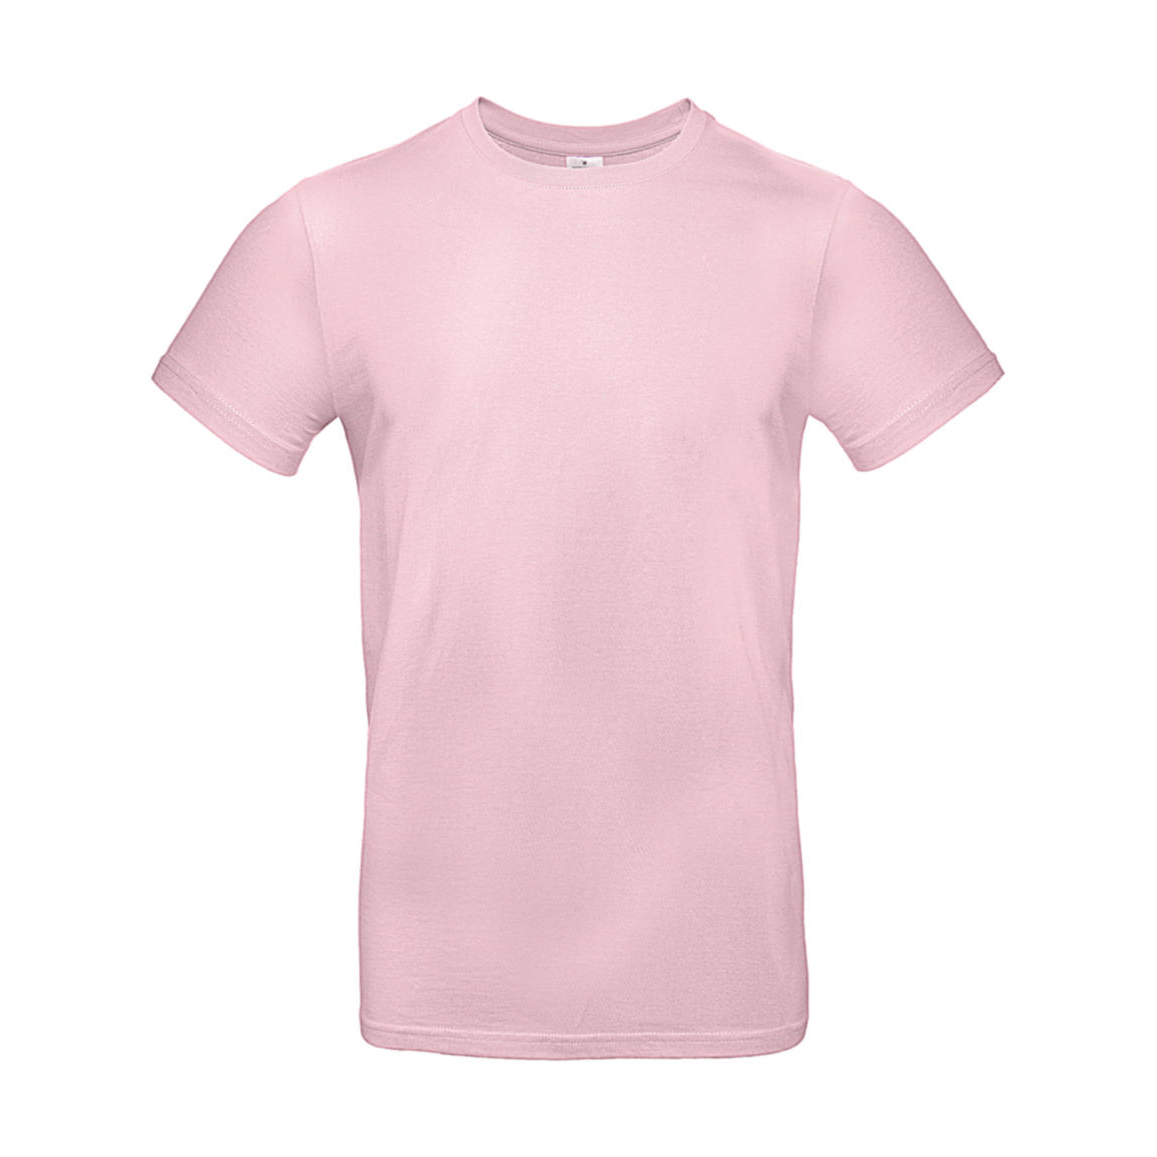 Triko pánské B&C E190 T-Shirt - světle růžové, L